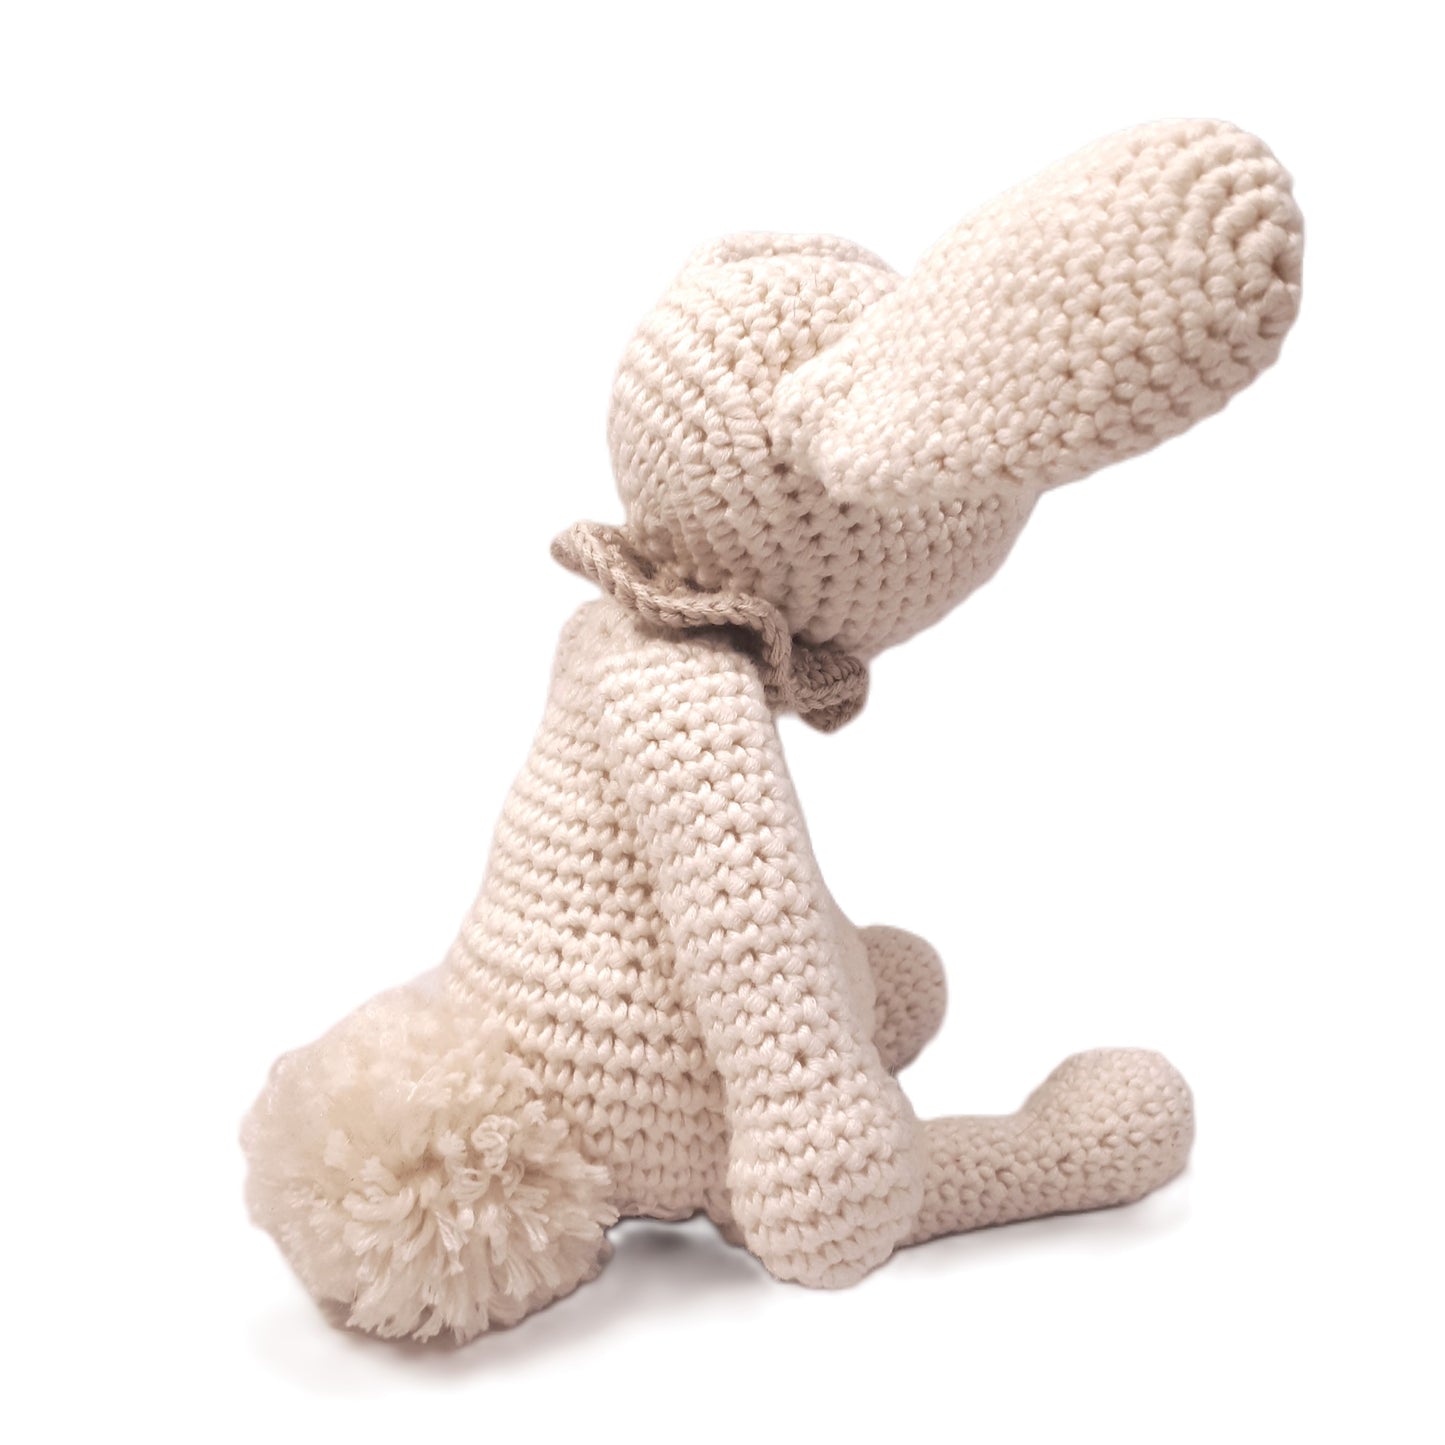 Baby Crocheted Animal & Matching Hat - Bunny